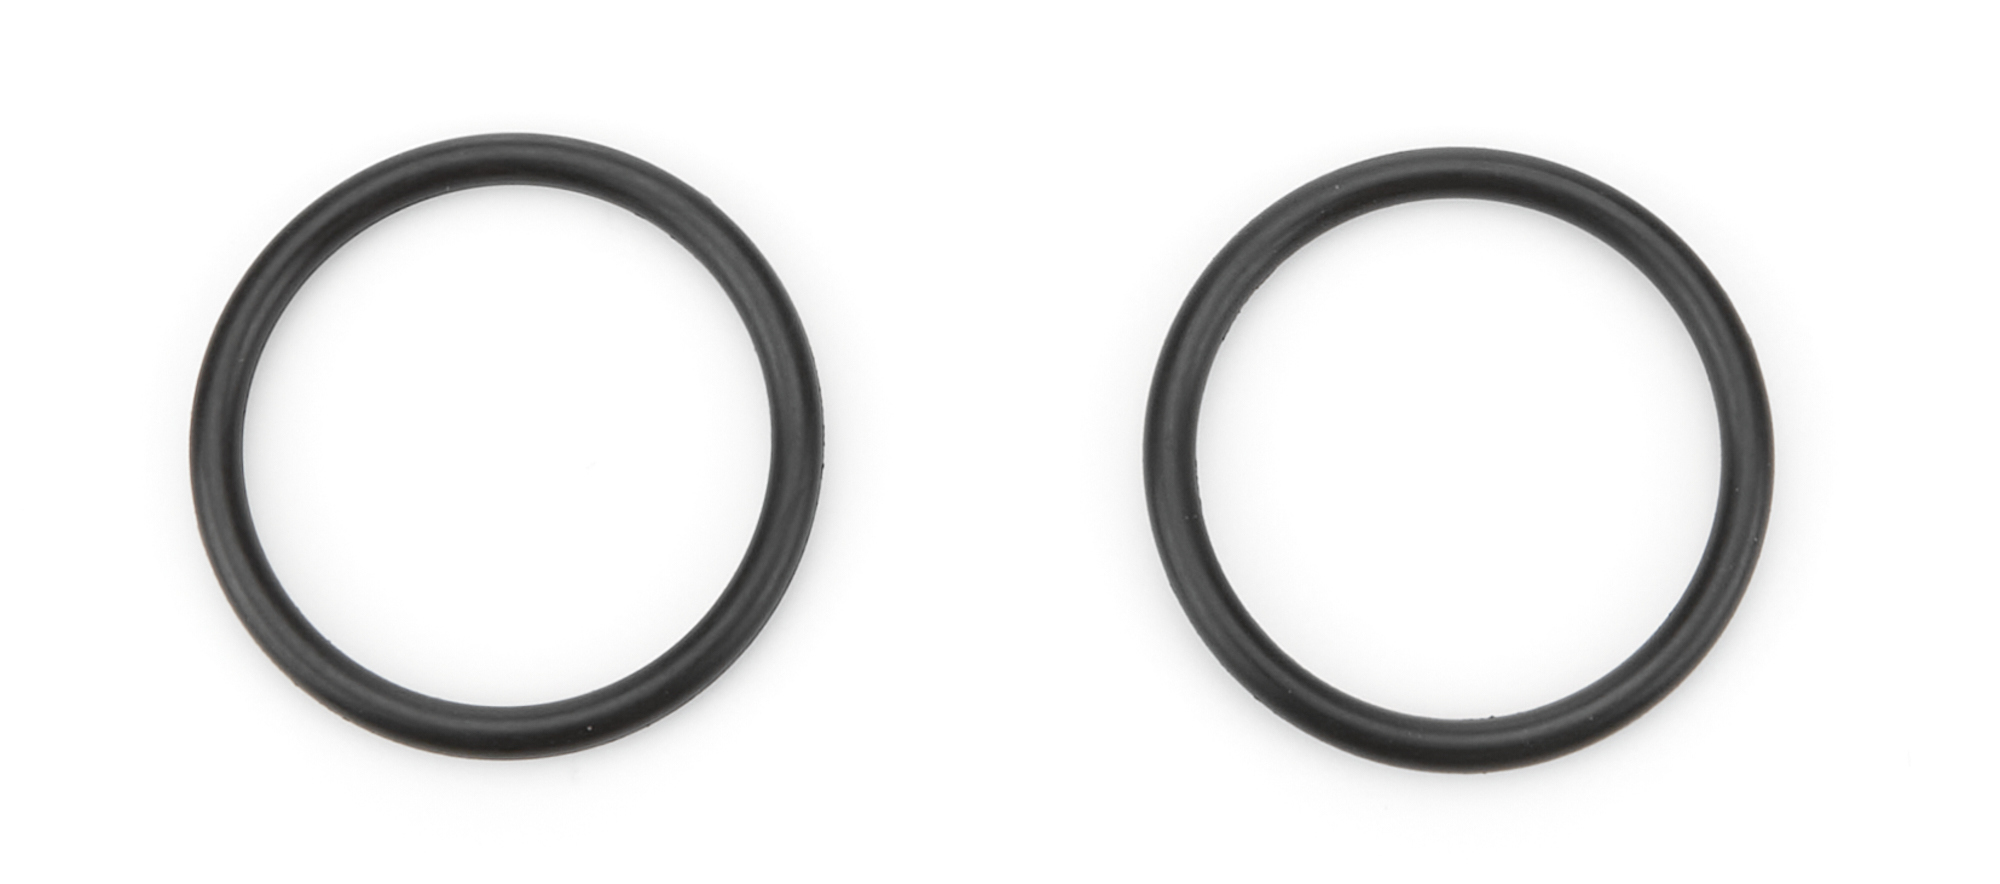 Kevko Oil Pans OR-138 O-Ring, 1.359 in Inside Diameter, 1.637 in Outside Diameter, Rubber, Black, Pair